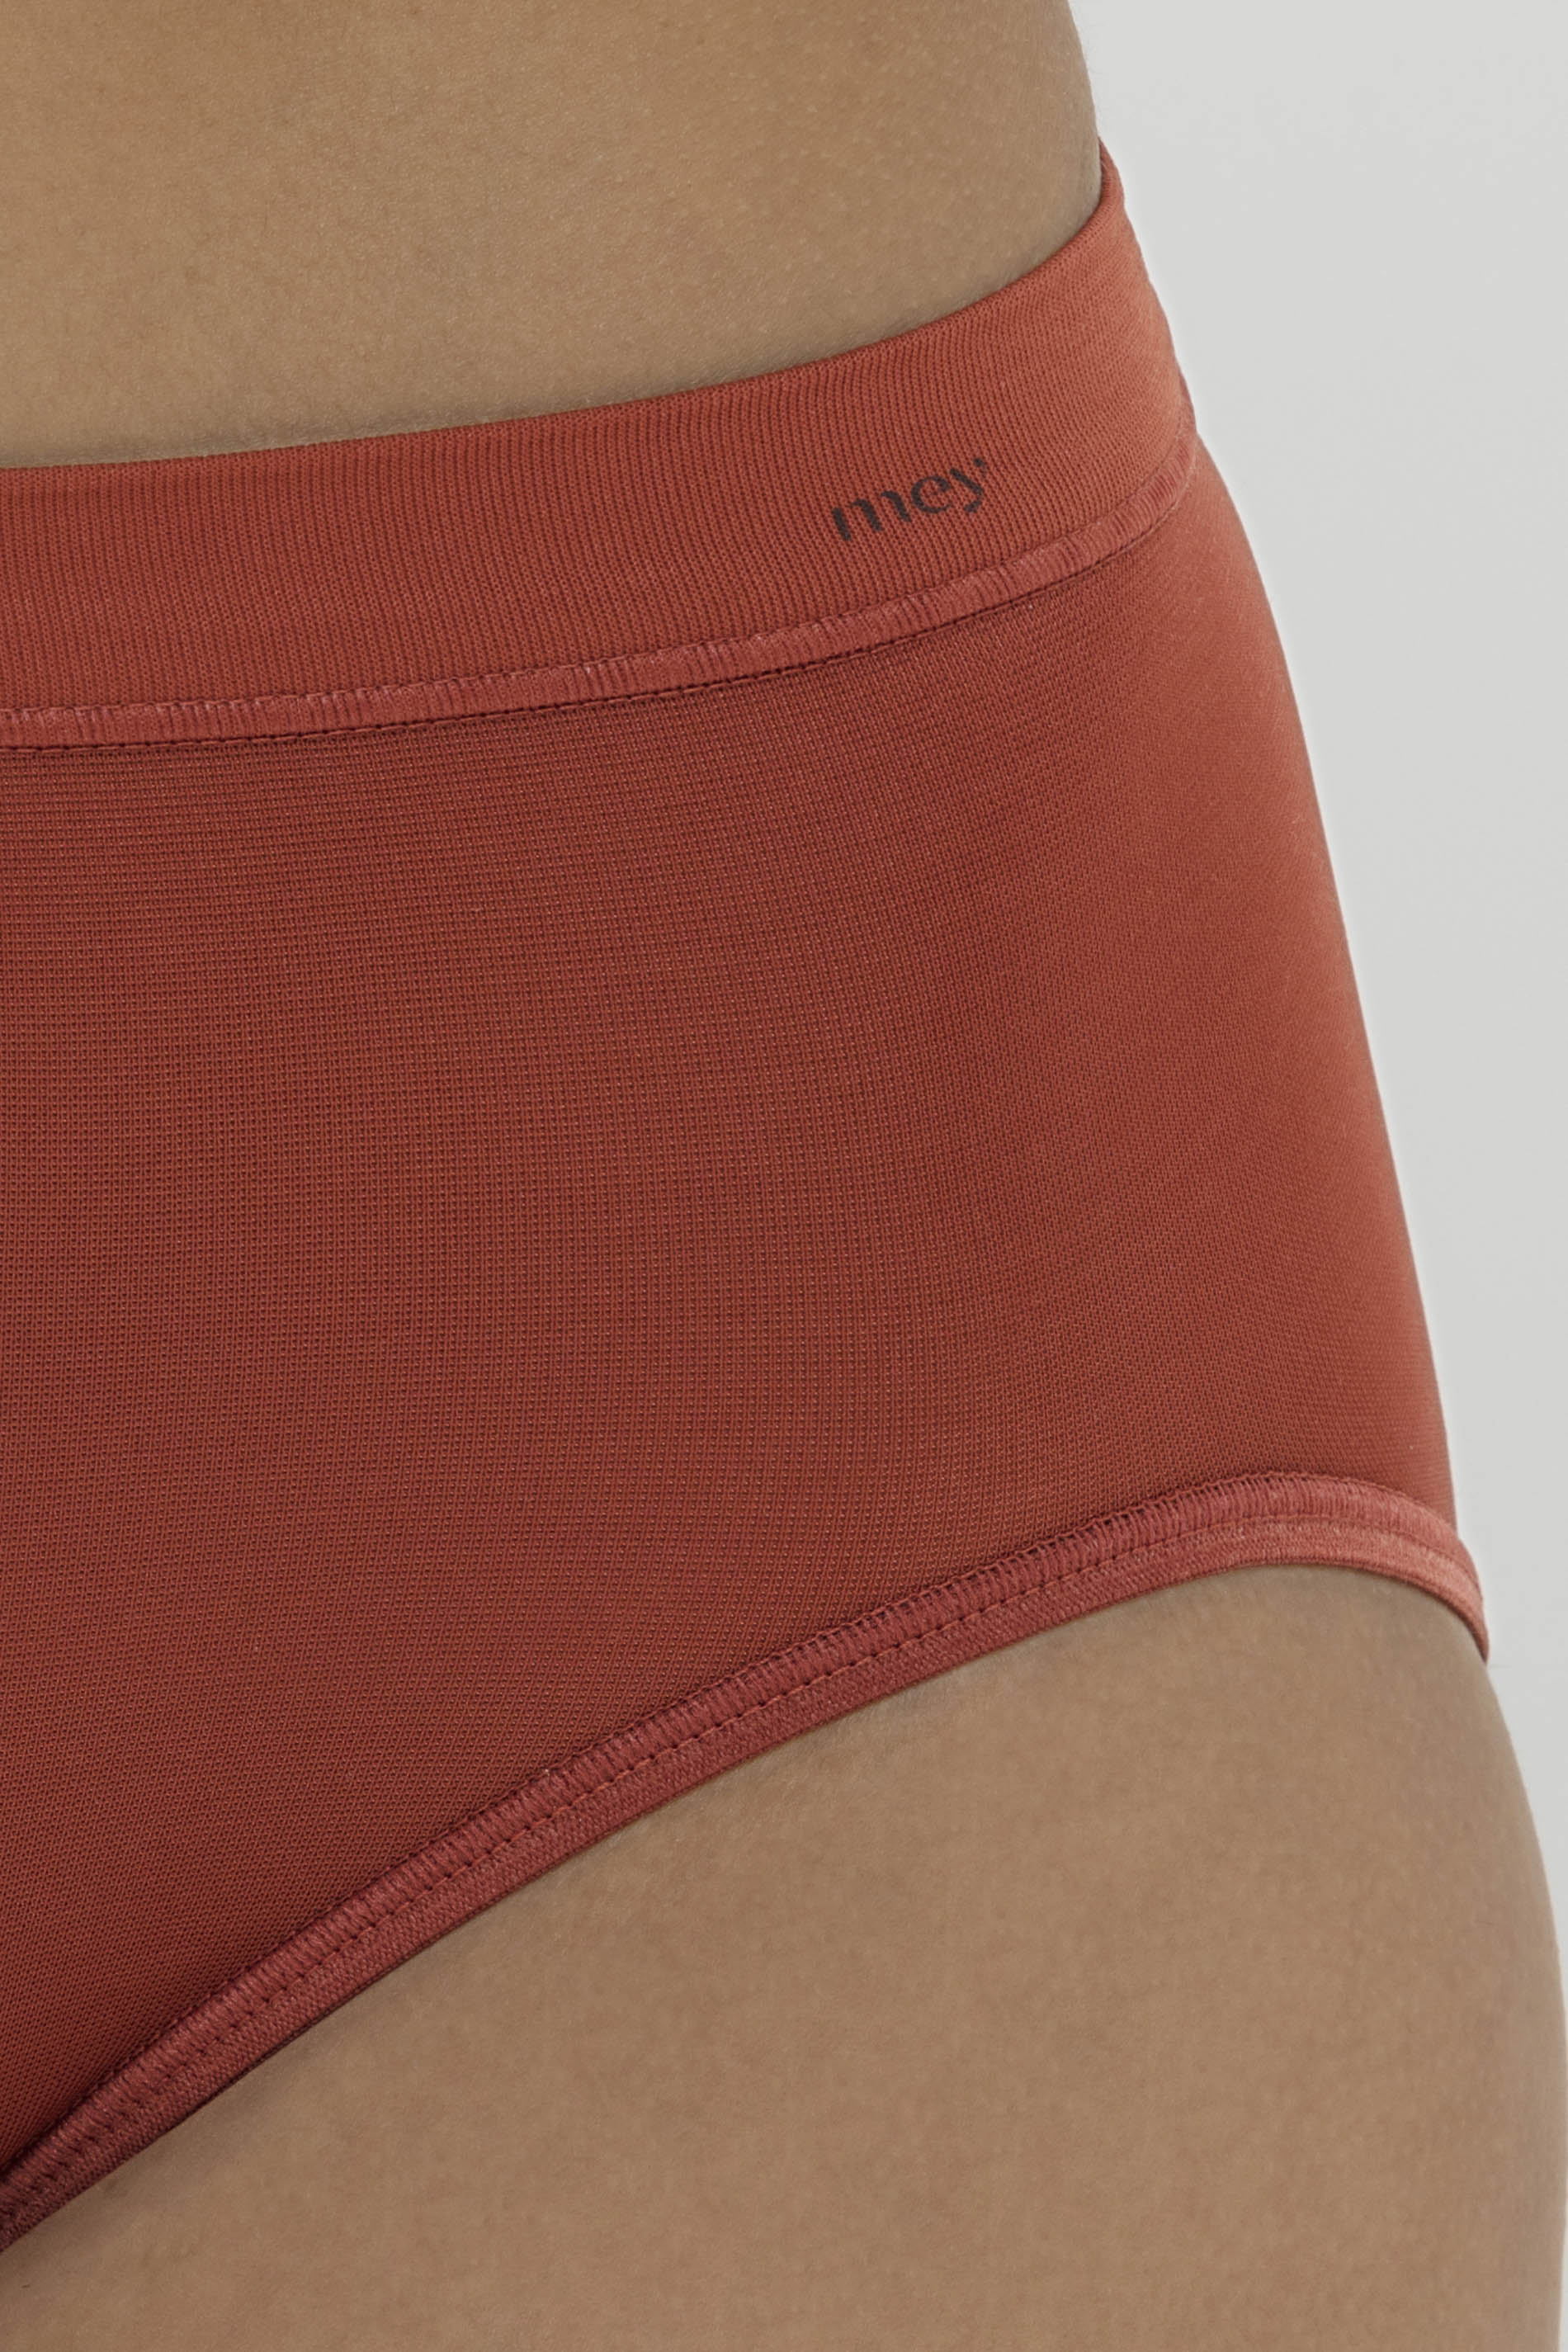 High waist pants Red Pepper Serie Emotion Detail View 01 | mey®